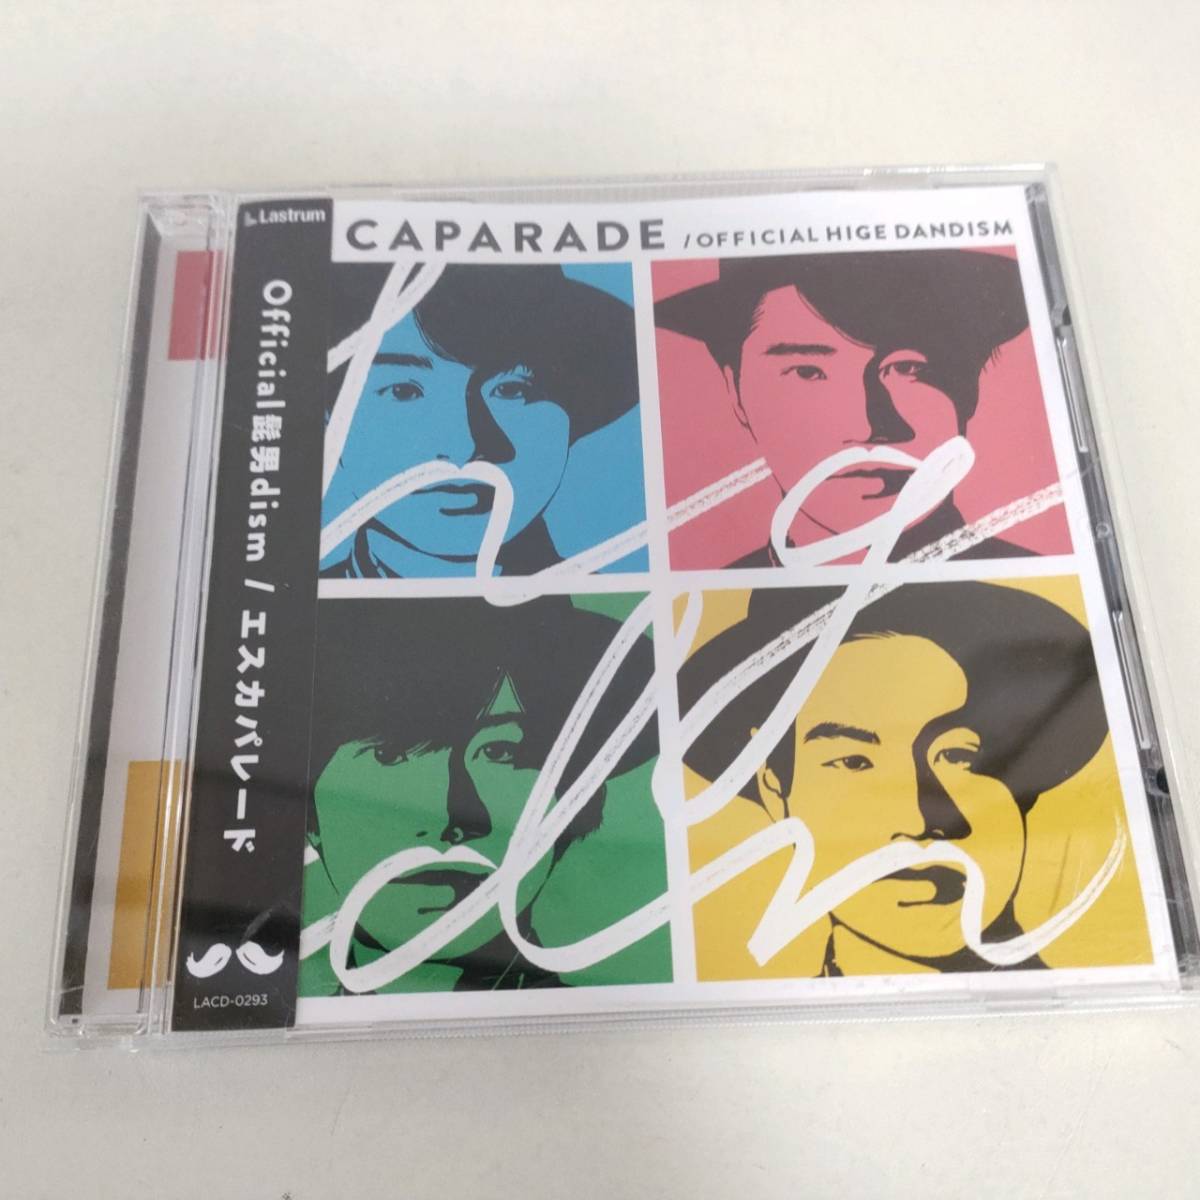 Y05-9 CD Official髭男dism / エスカパレード 通常盤